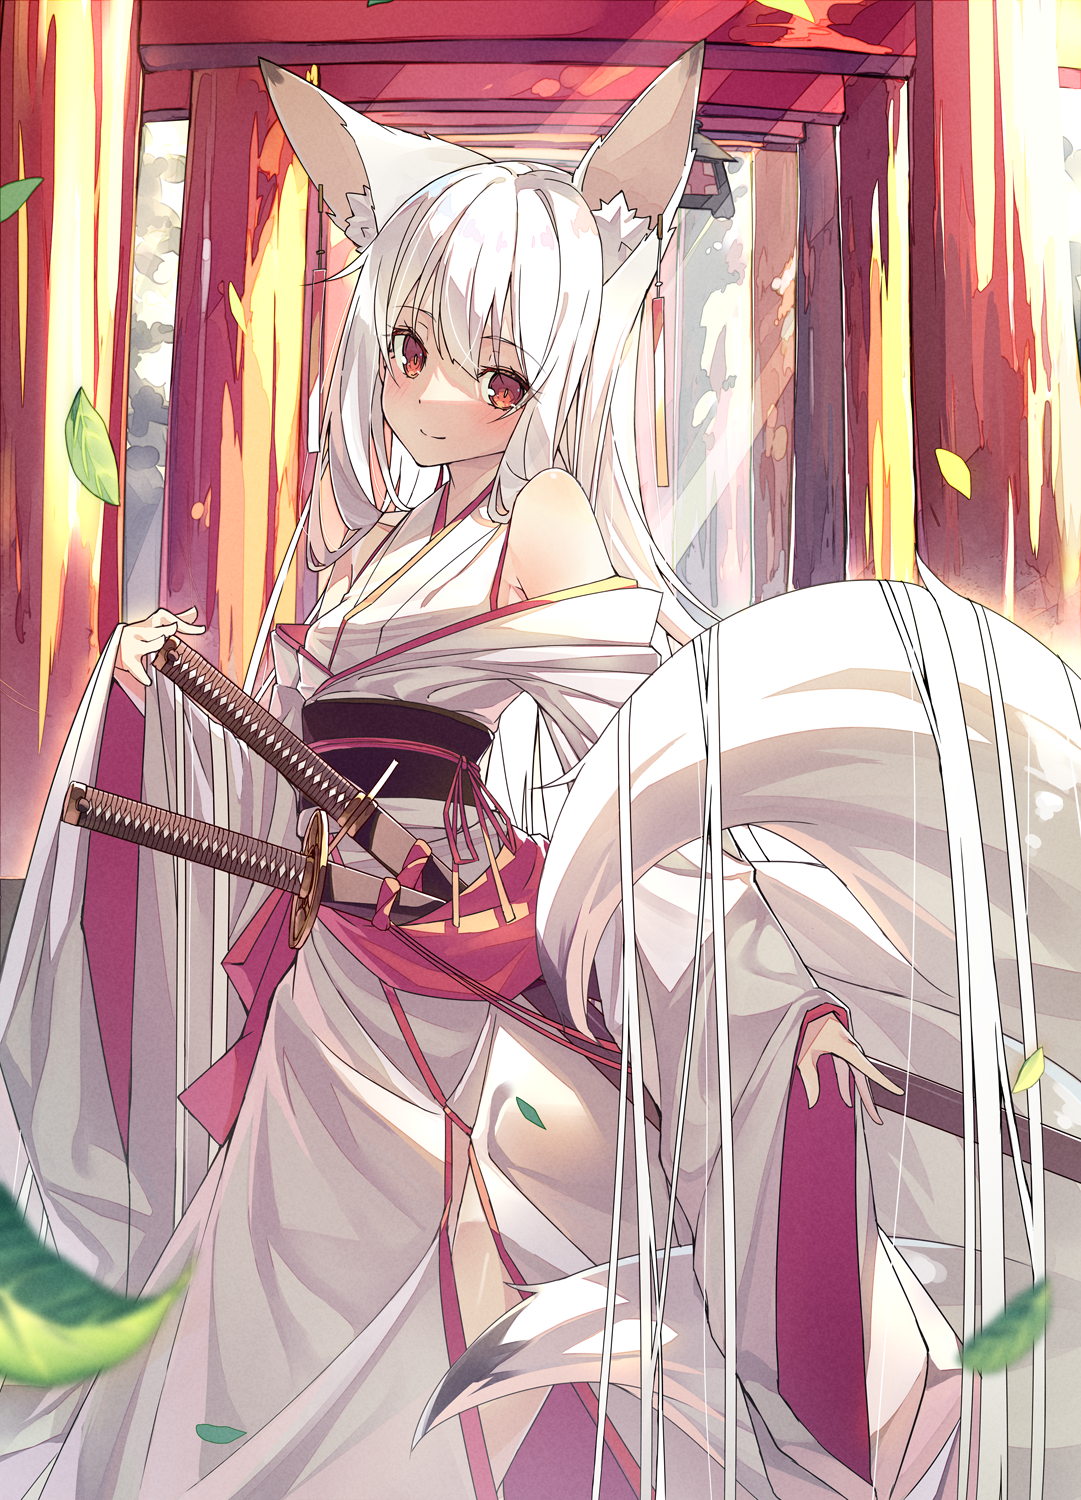 An anime kitsune